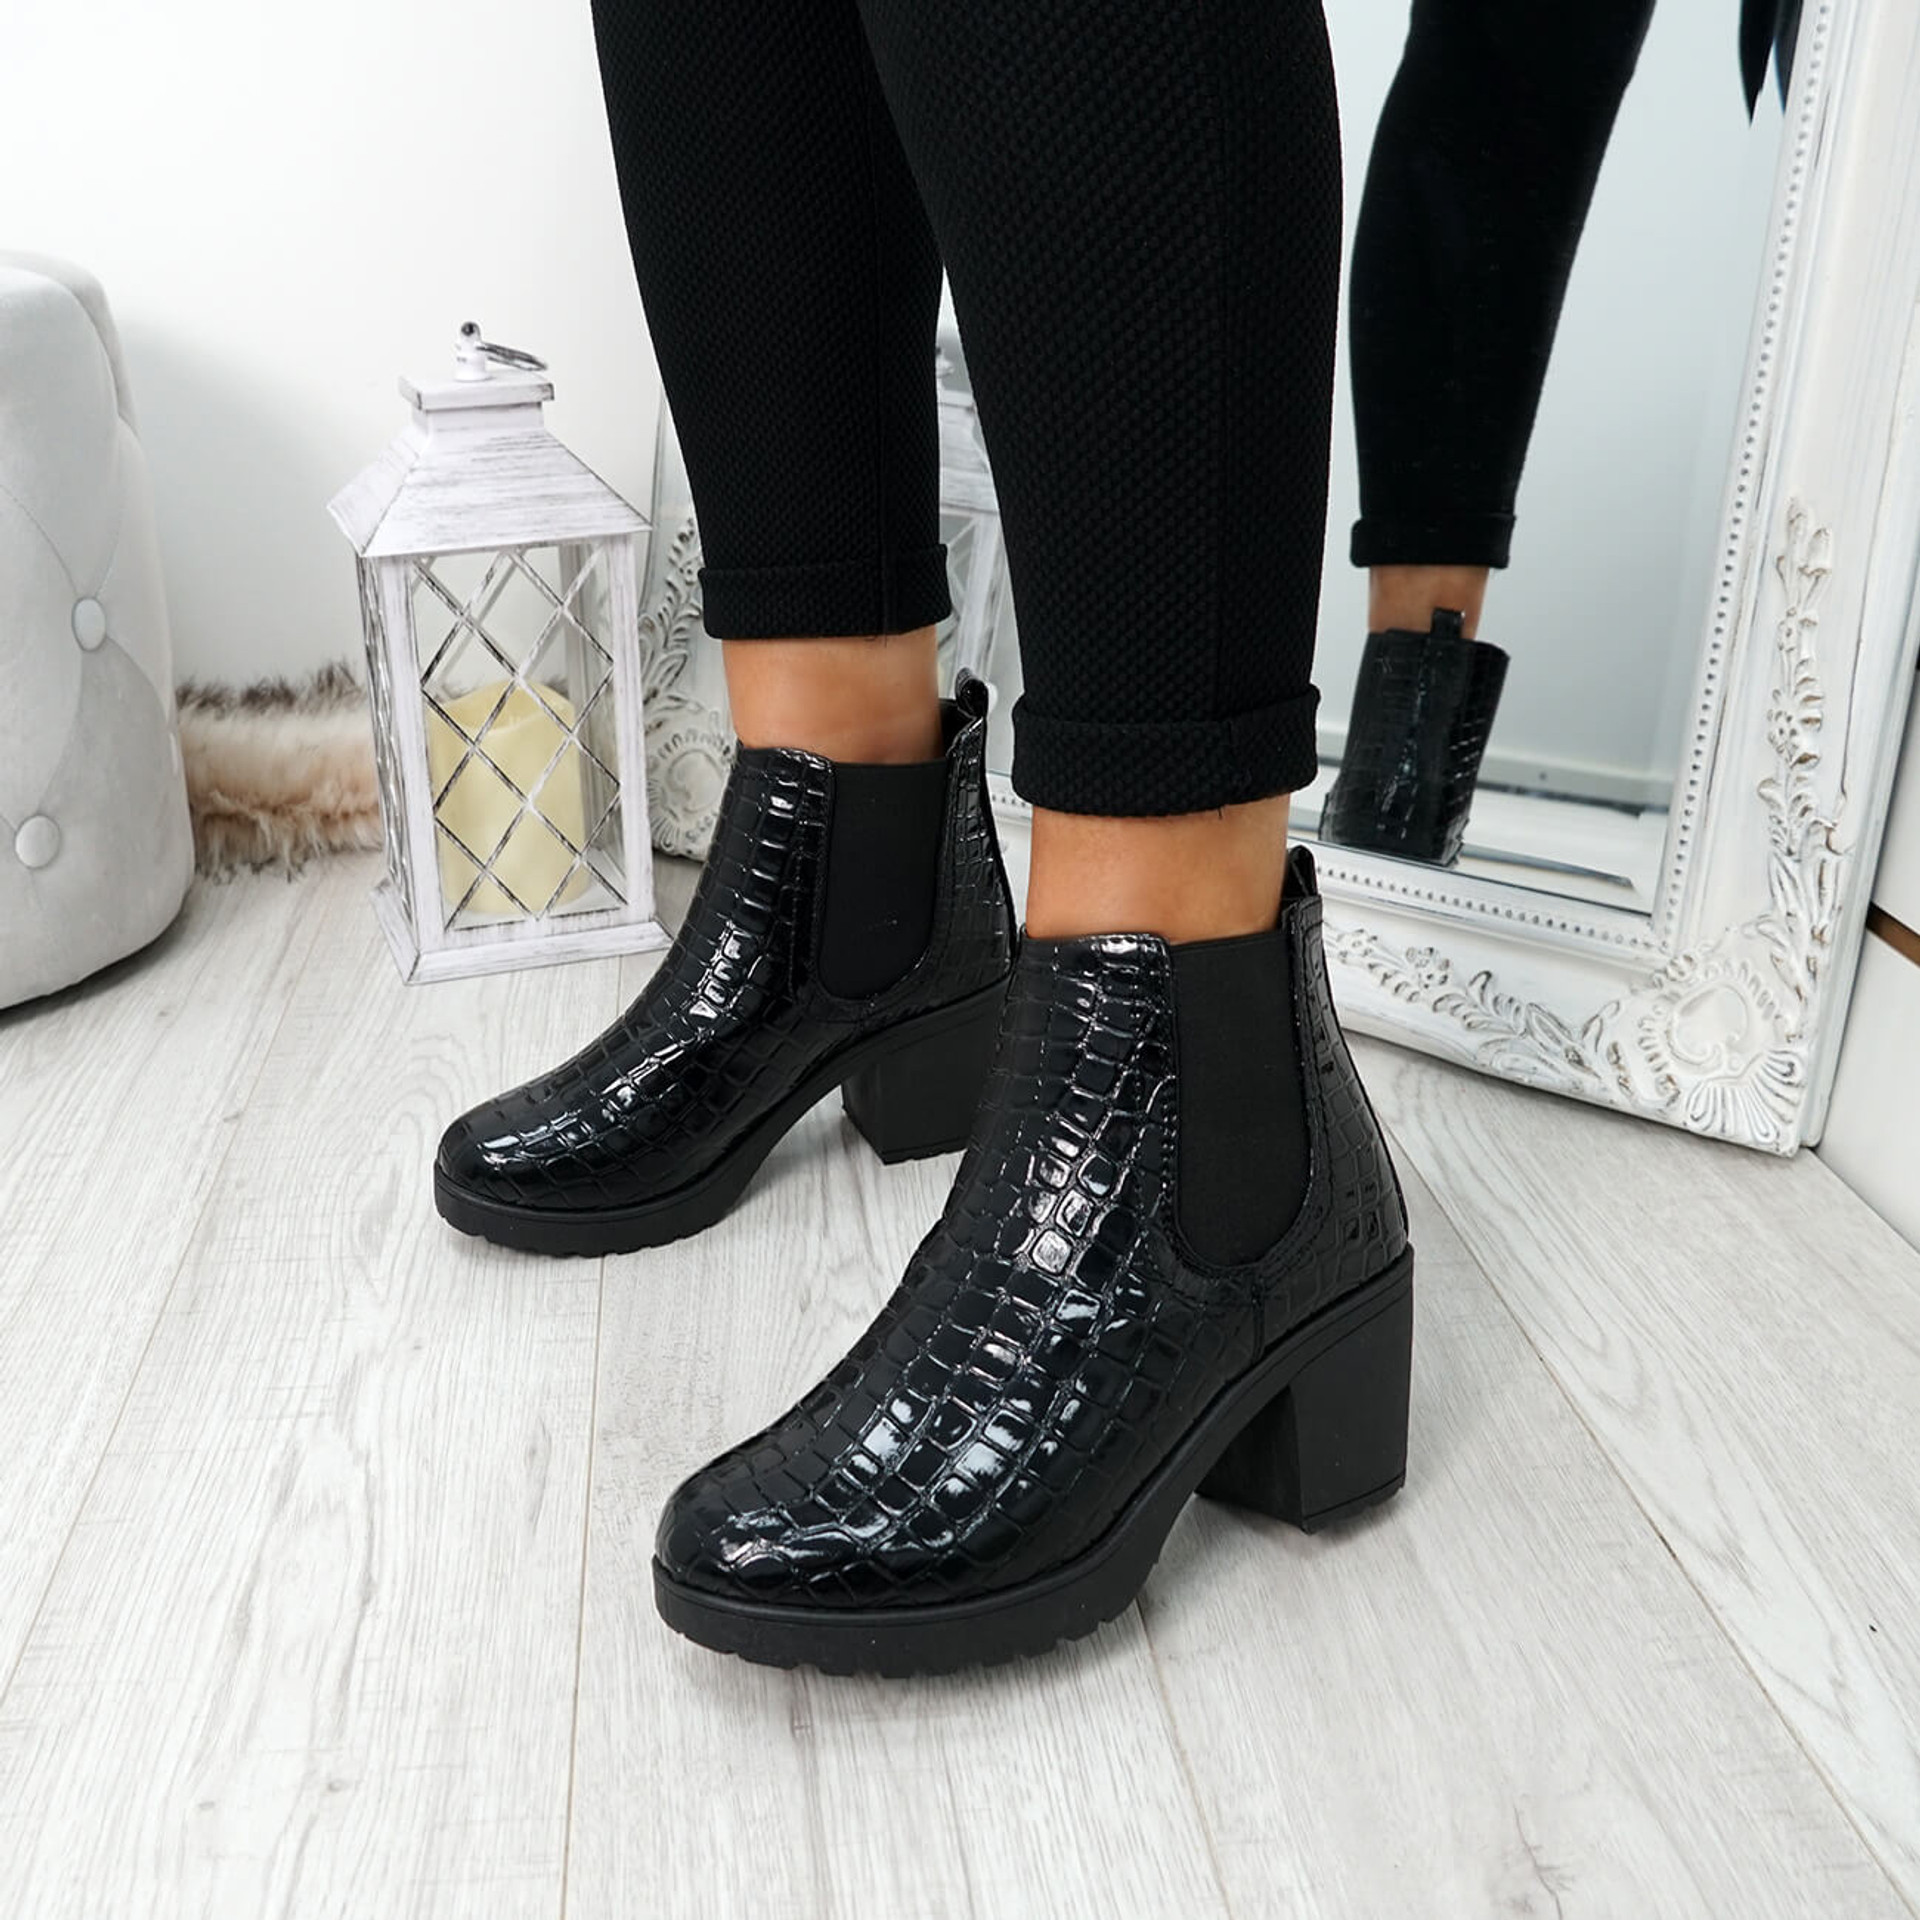 Zimka Black Croc Skin Ankle Boots